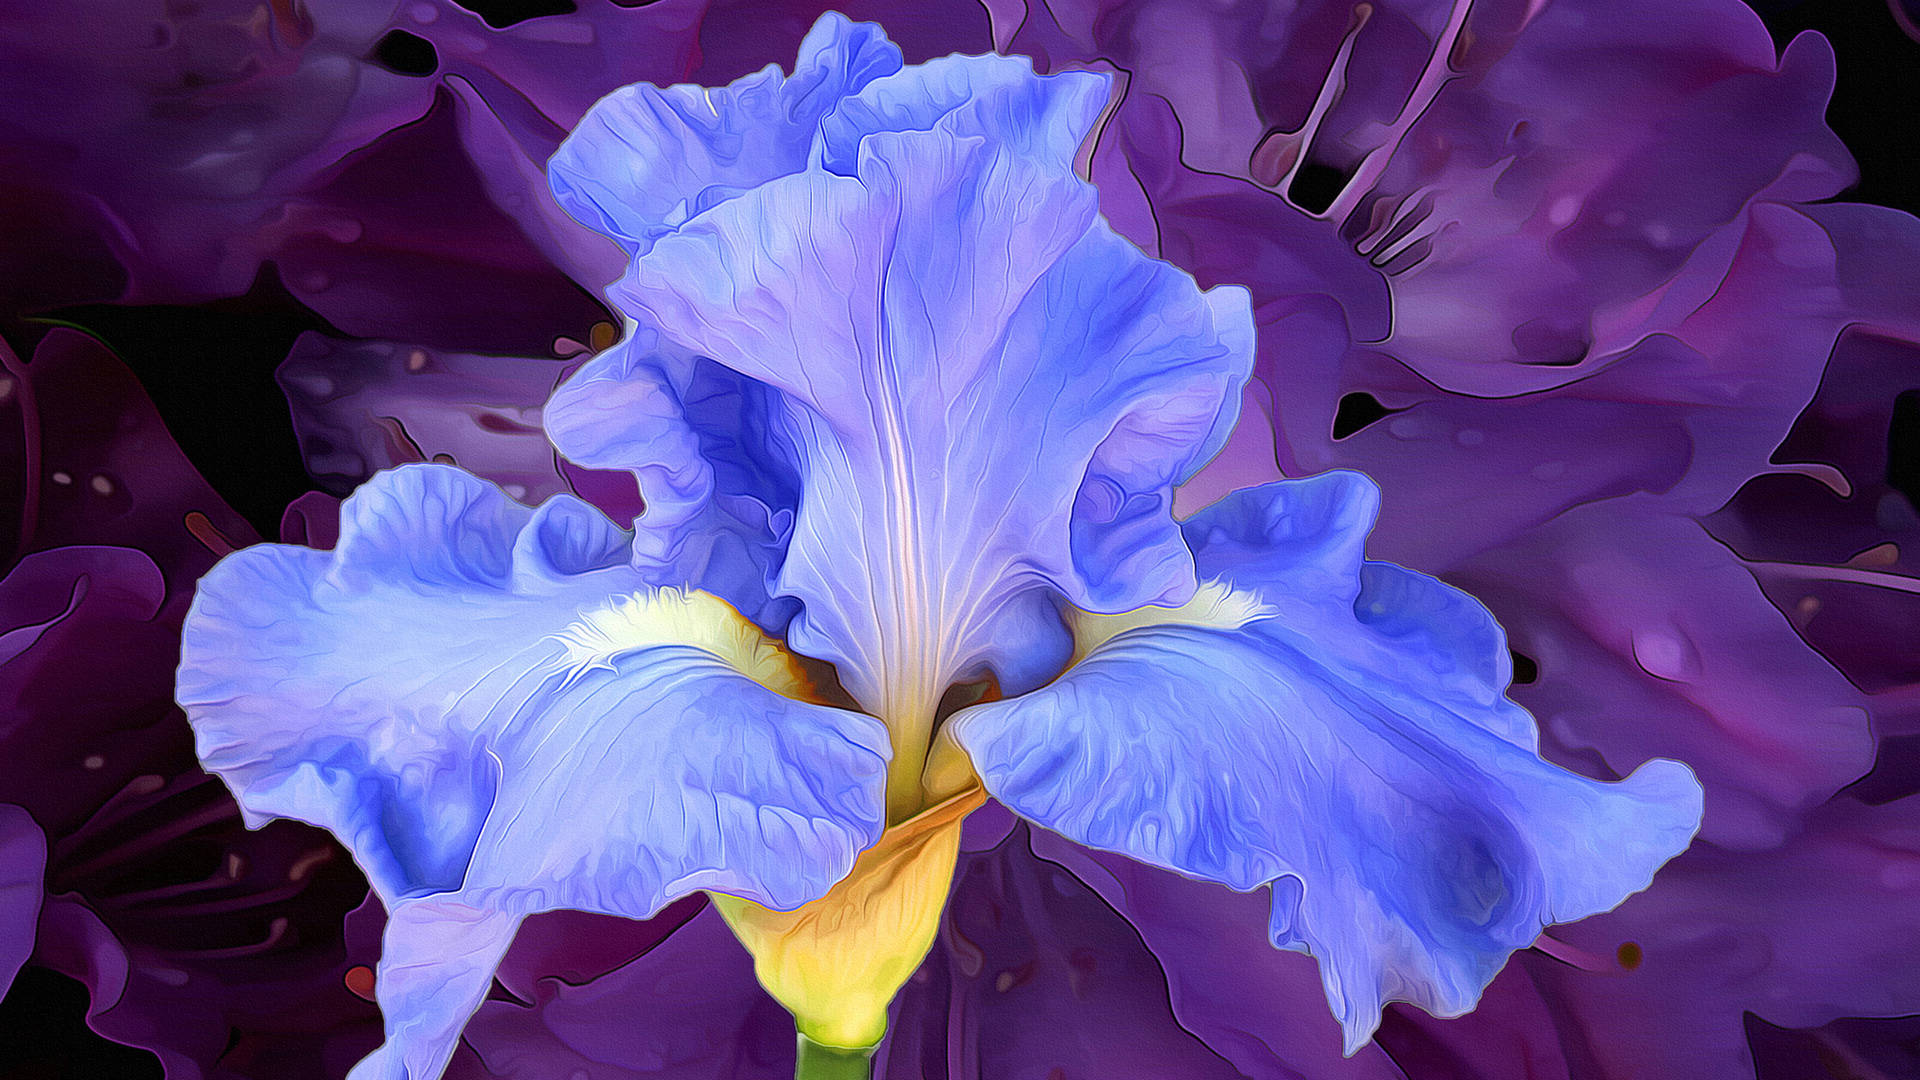 Hyper Realistic Purple Iris Flower Painting